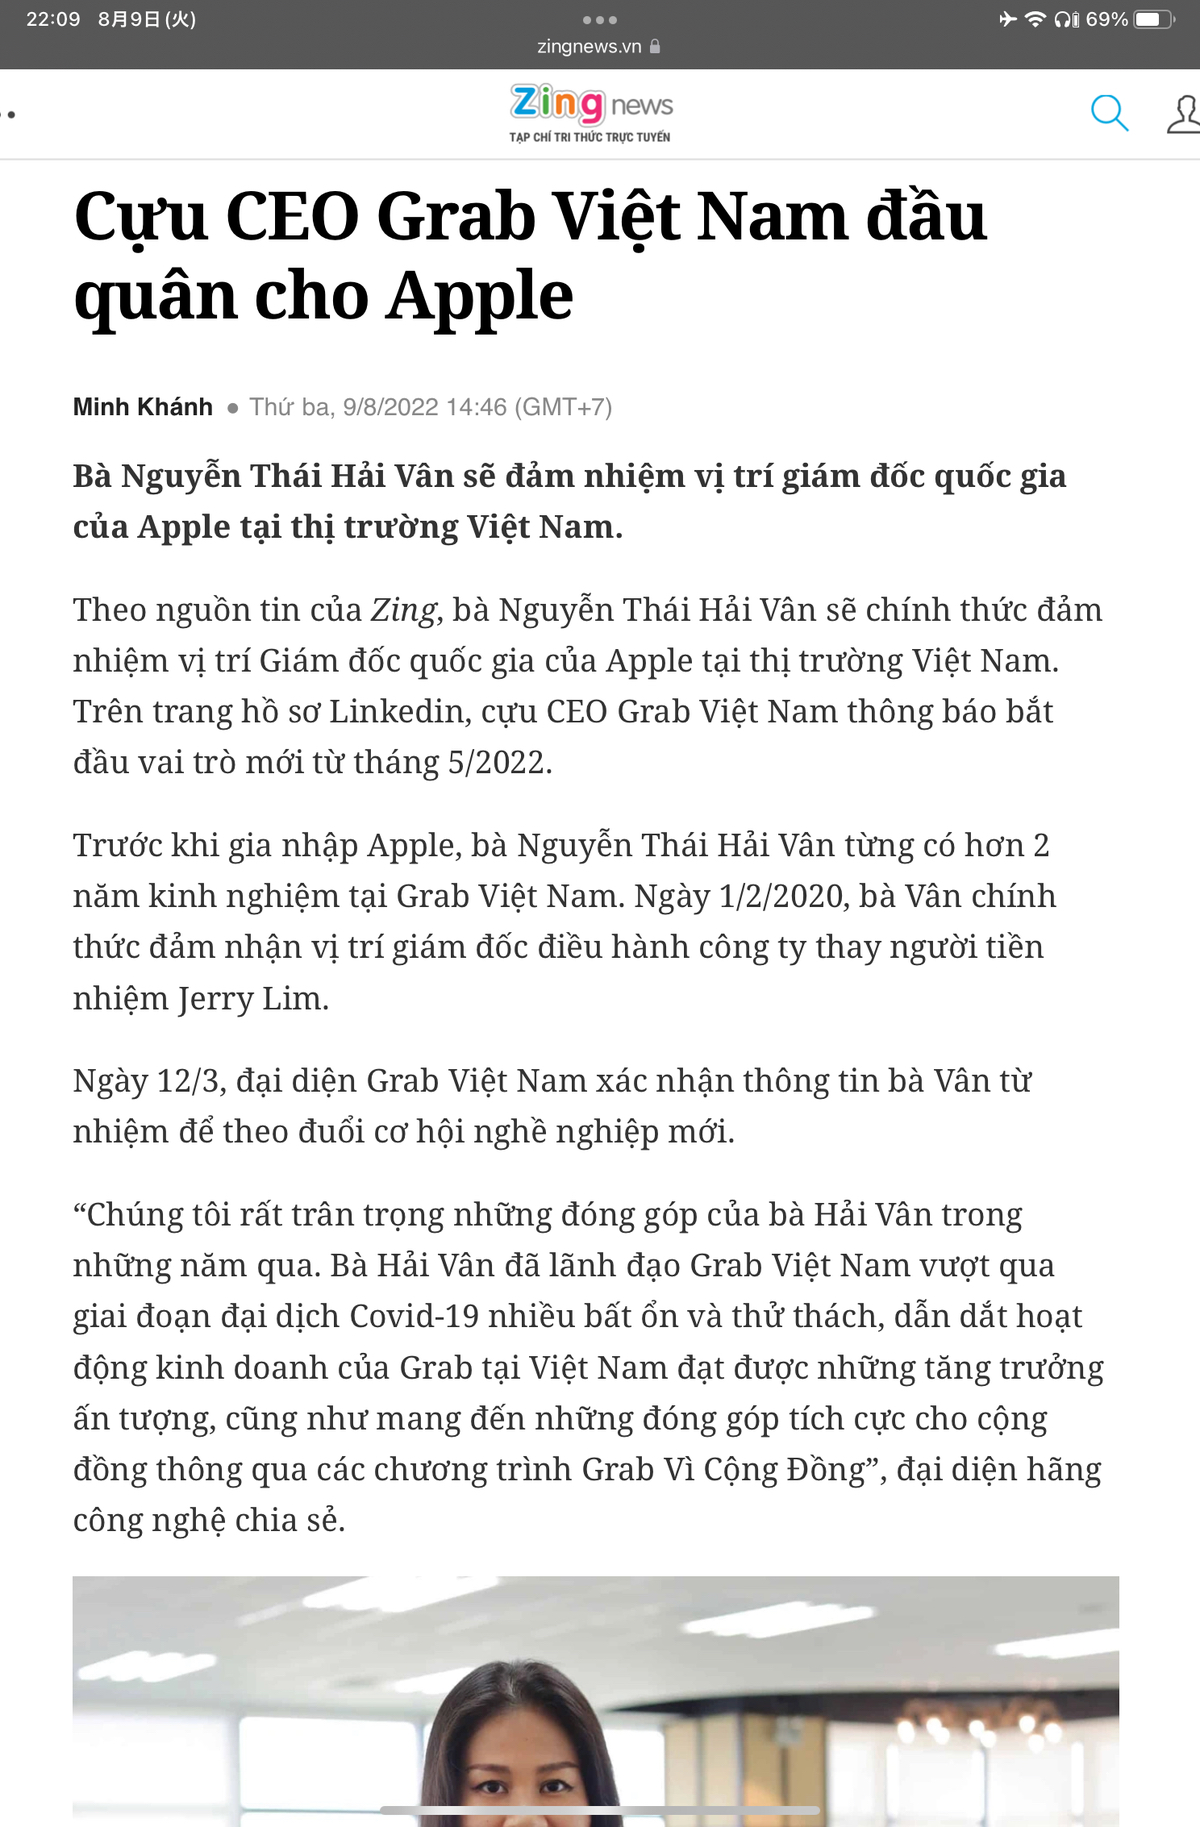 Apple Store Việt Nam sắp mở chăng